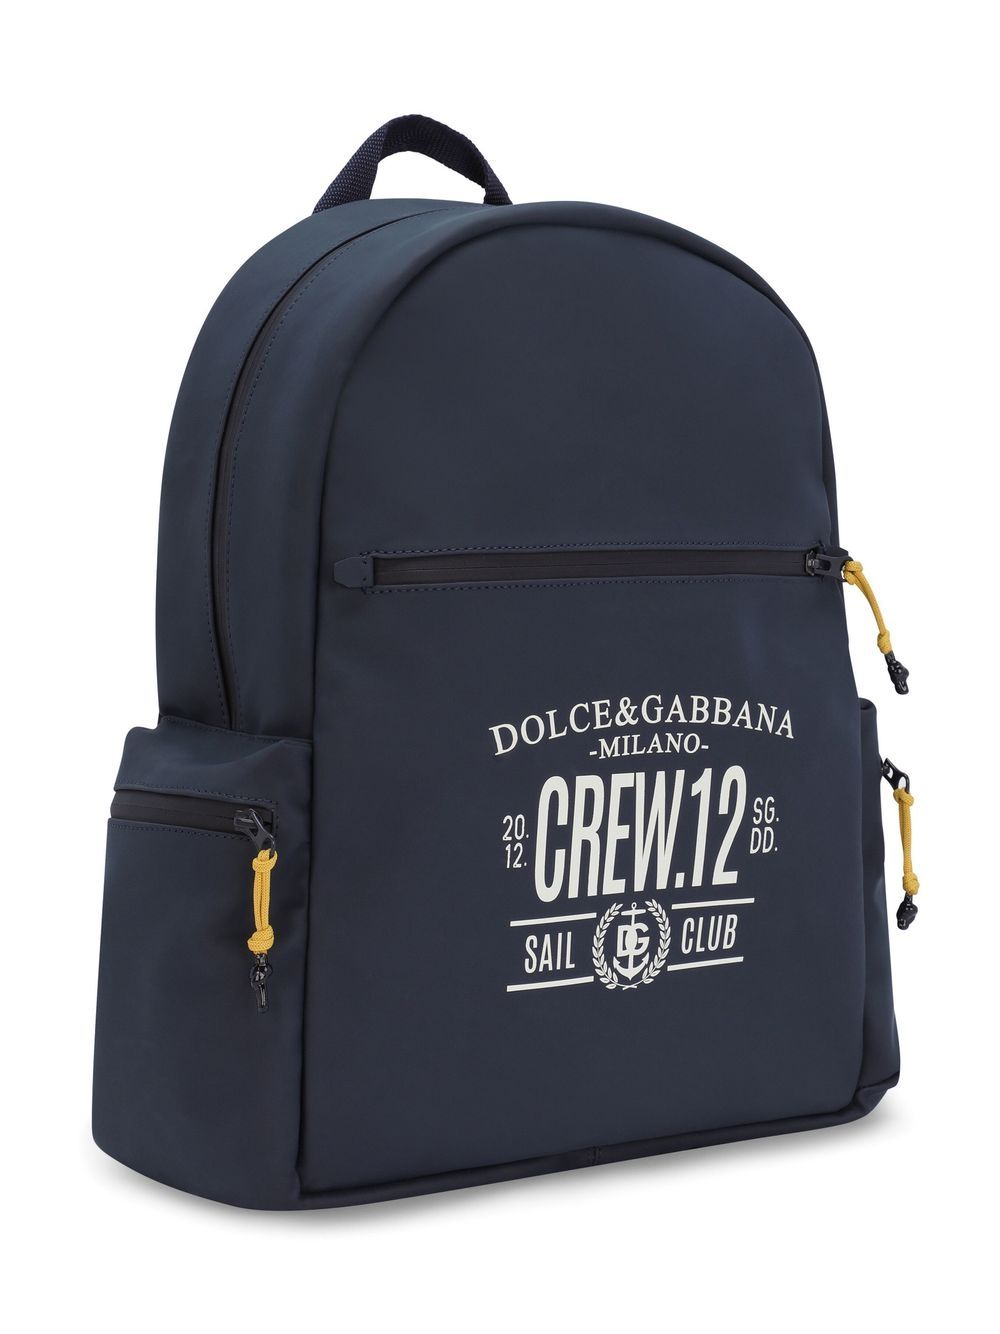 Image 2 of Dolce & Gabbana Kids Crew Sail Club backpack